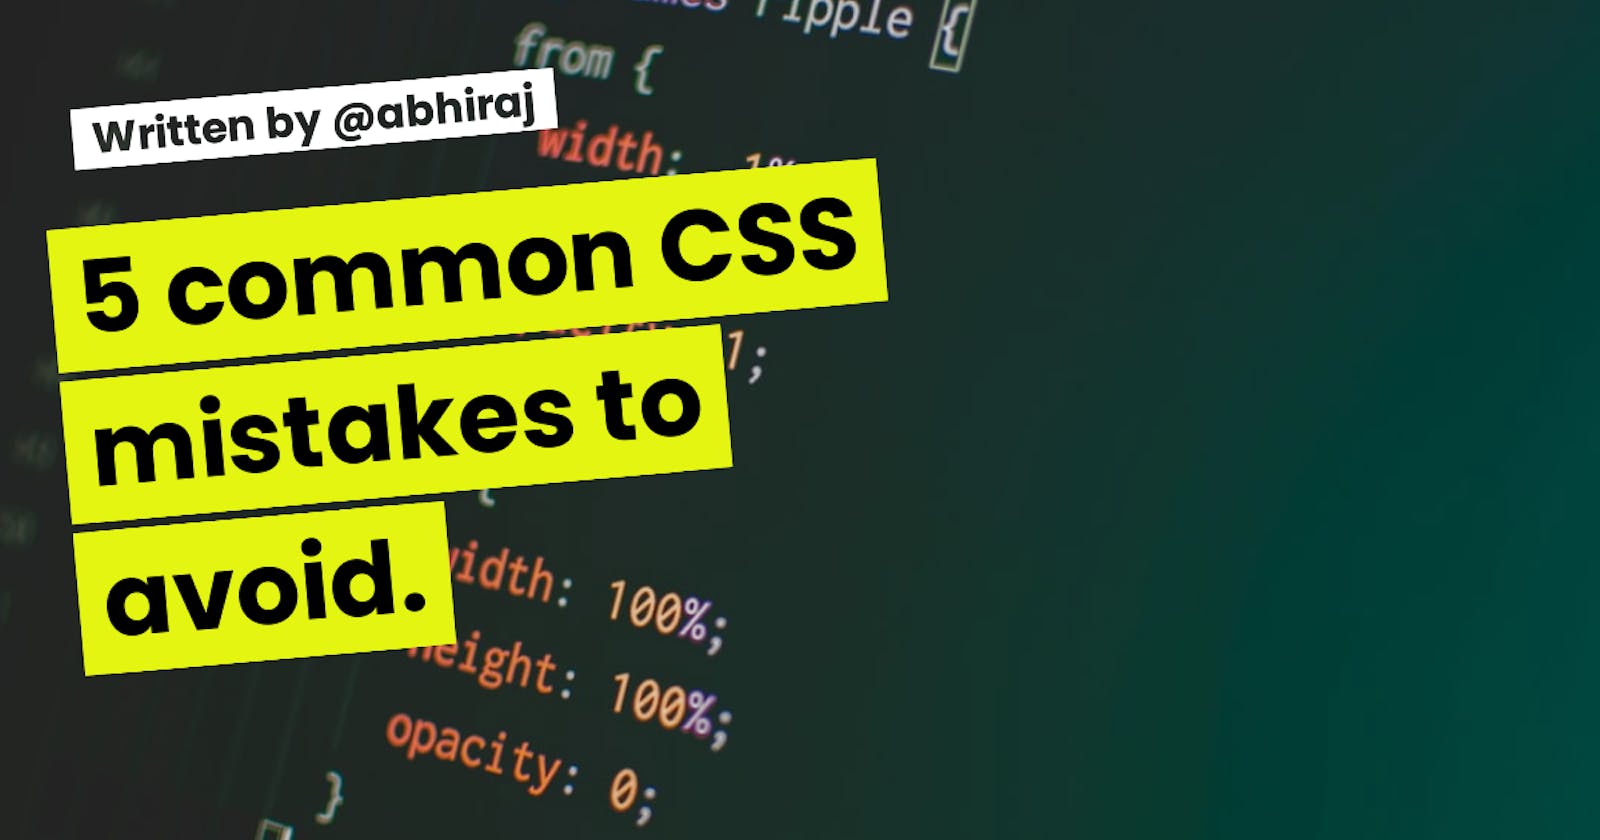 5 common CSS mistakes to avoid